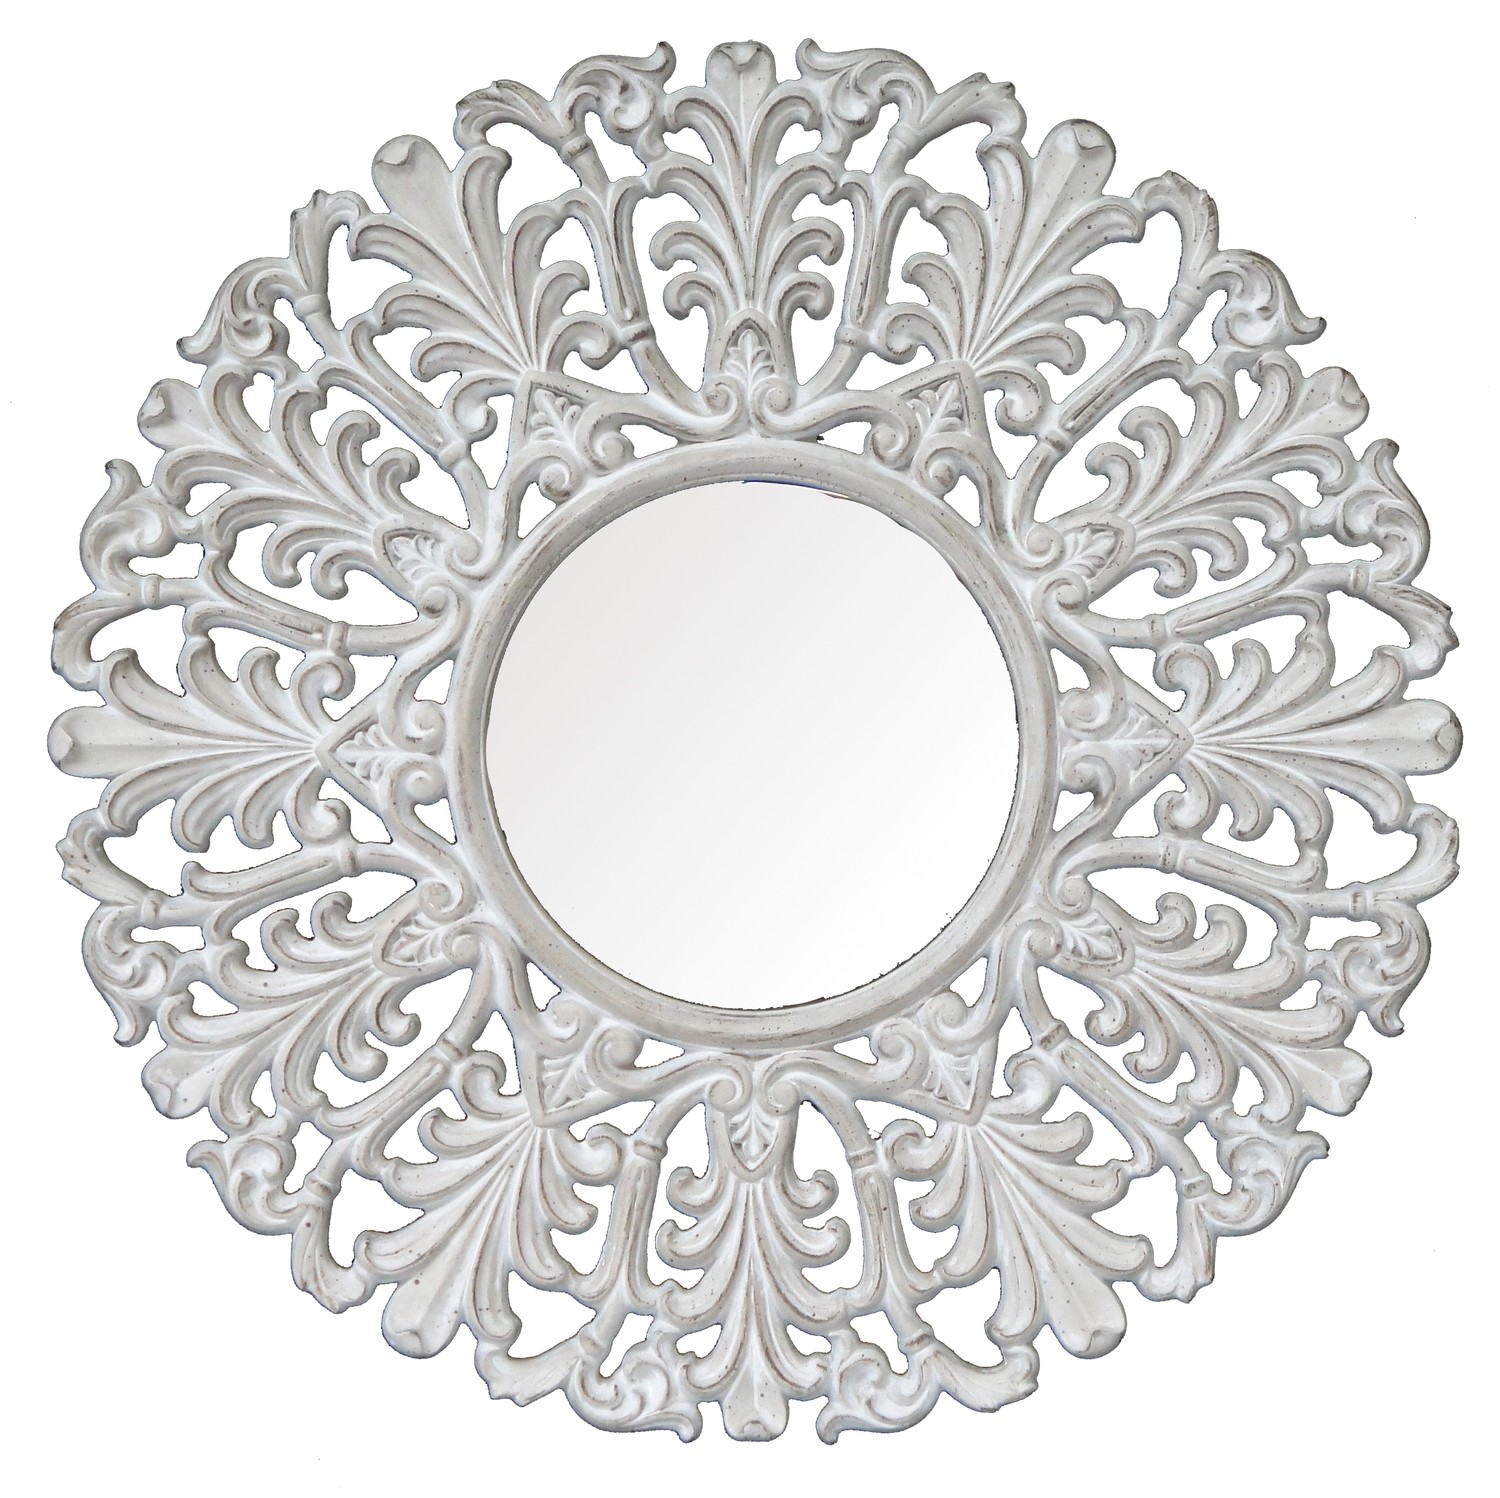 CFO68 Whitewashed round ornate mirror